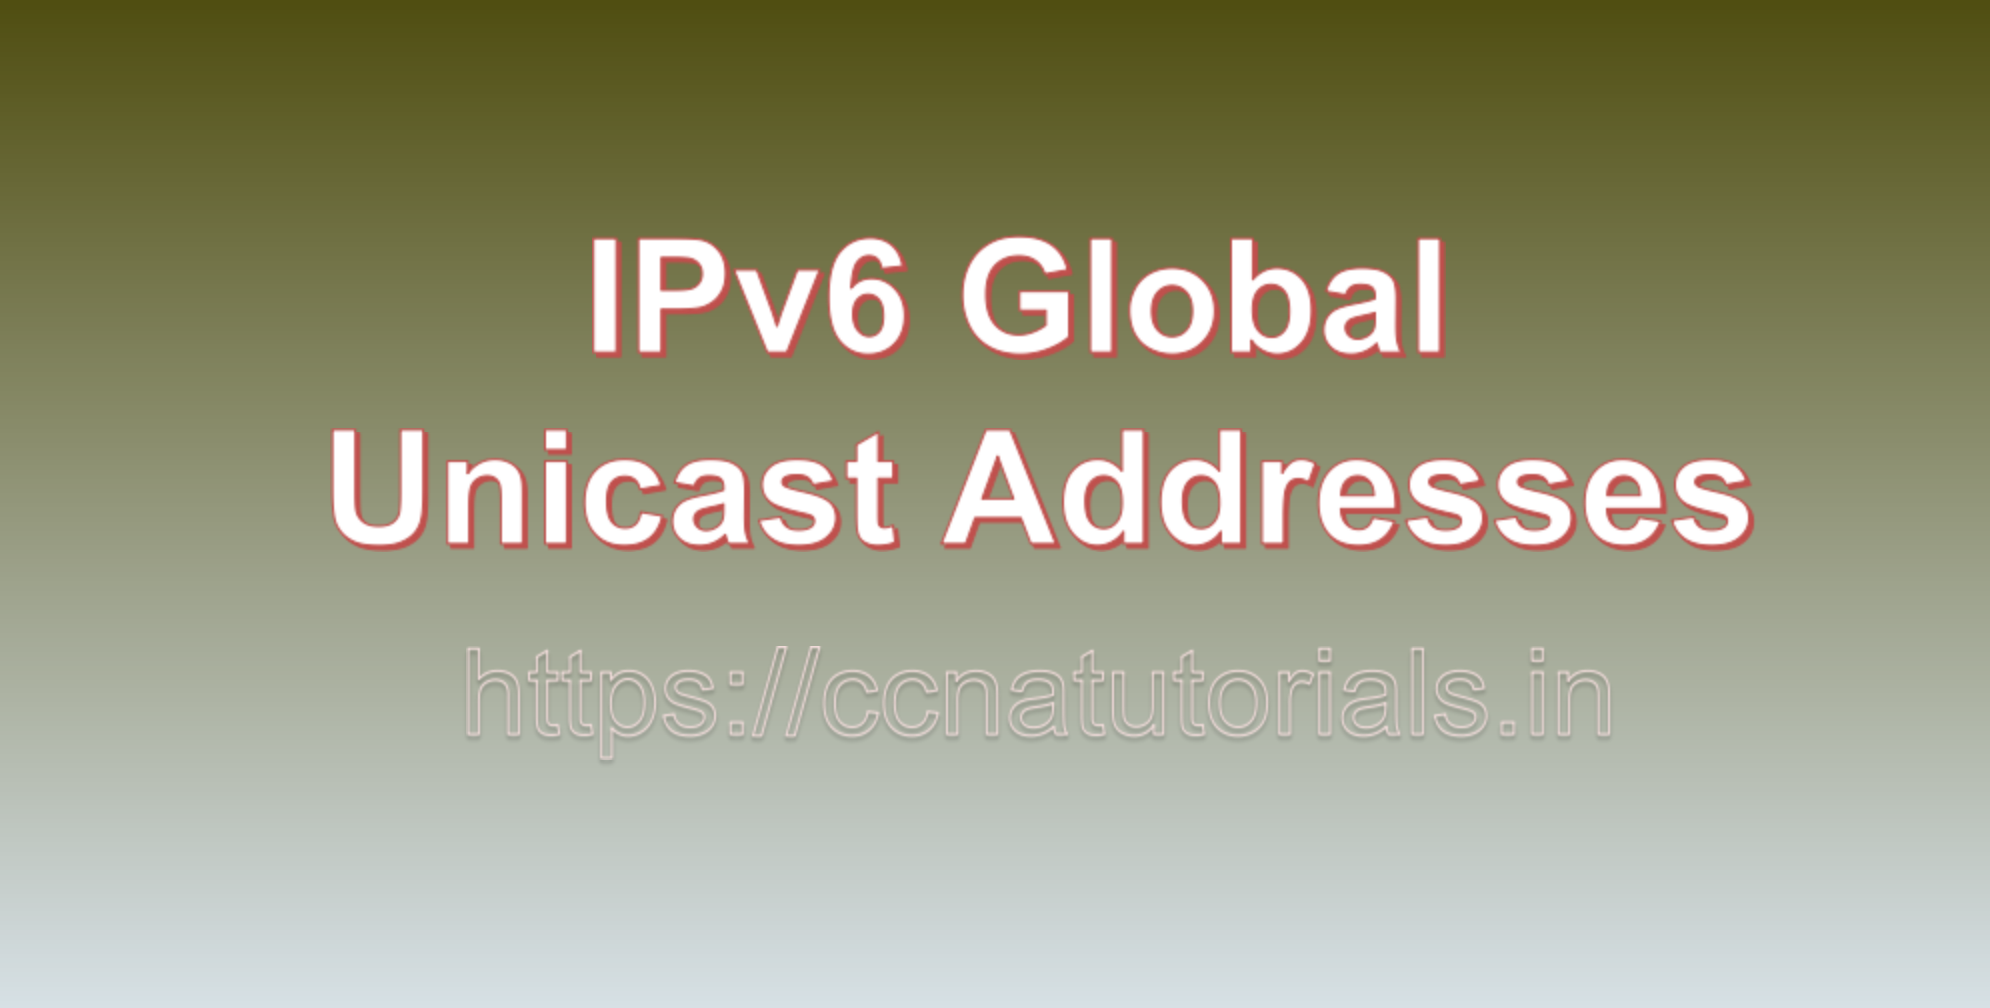 IPv6 Global Unicast Addresses, ccna, CCNA TUTORIALS